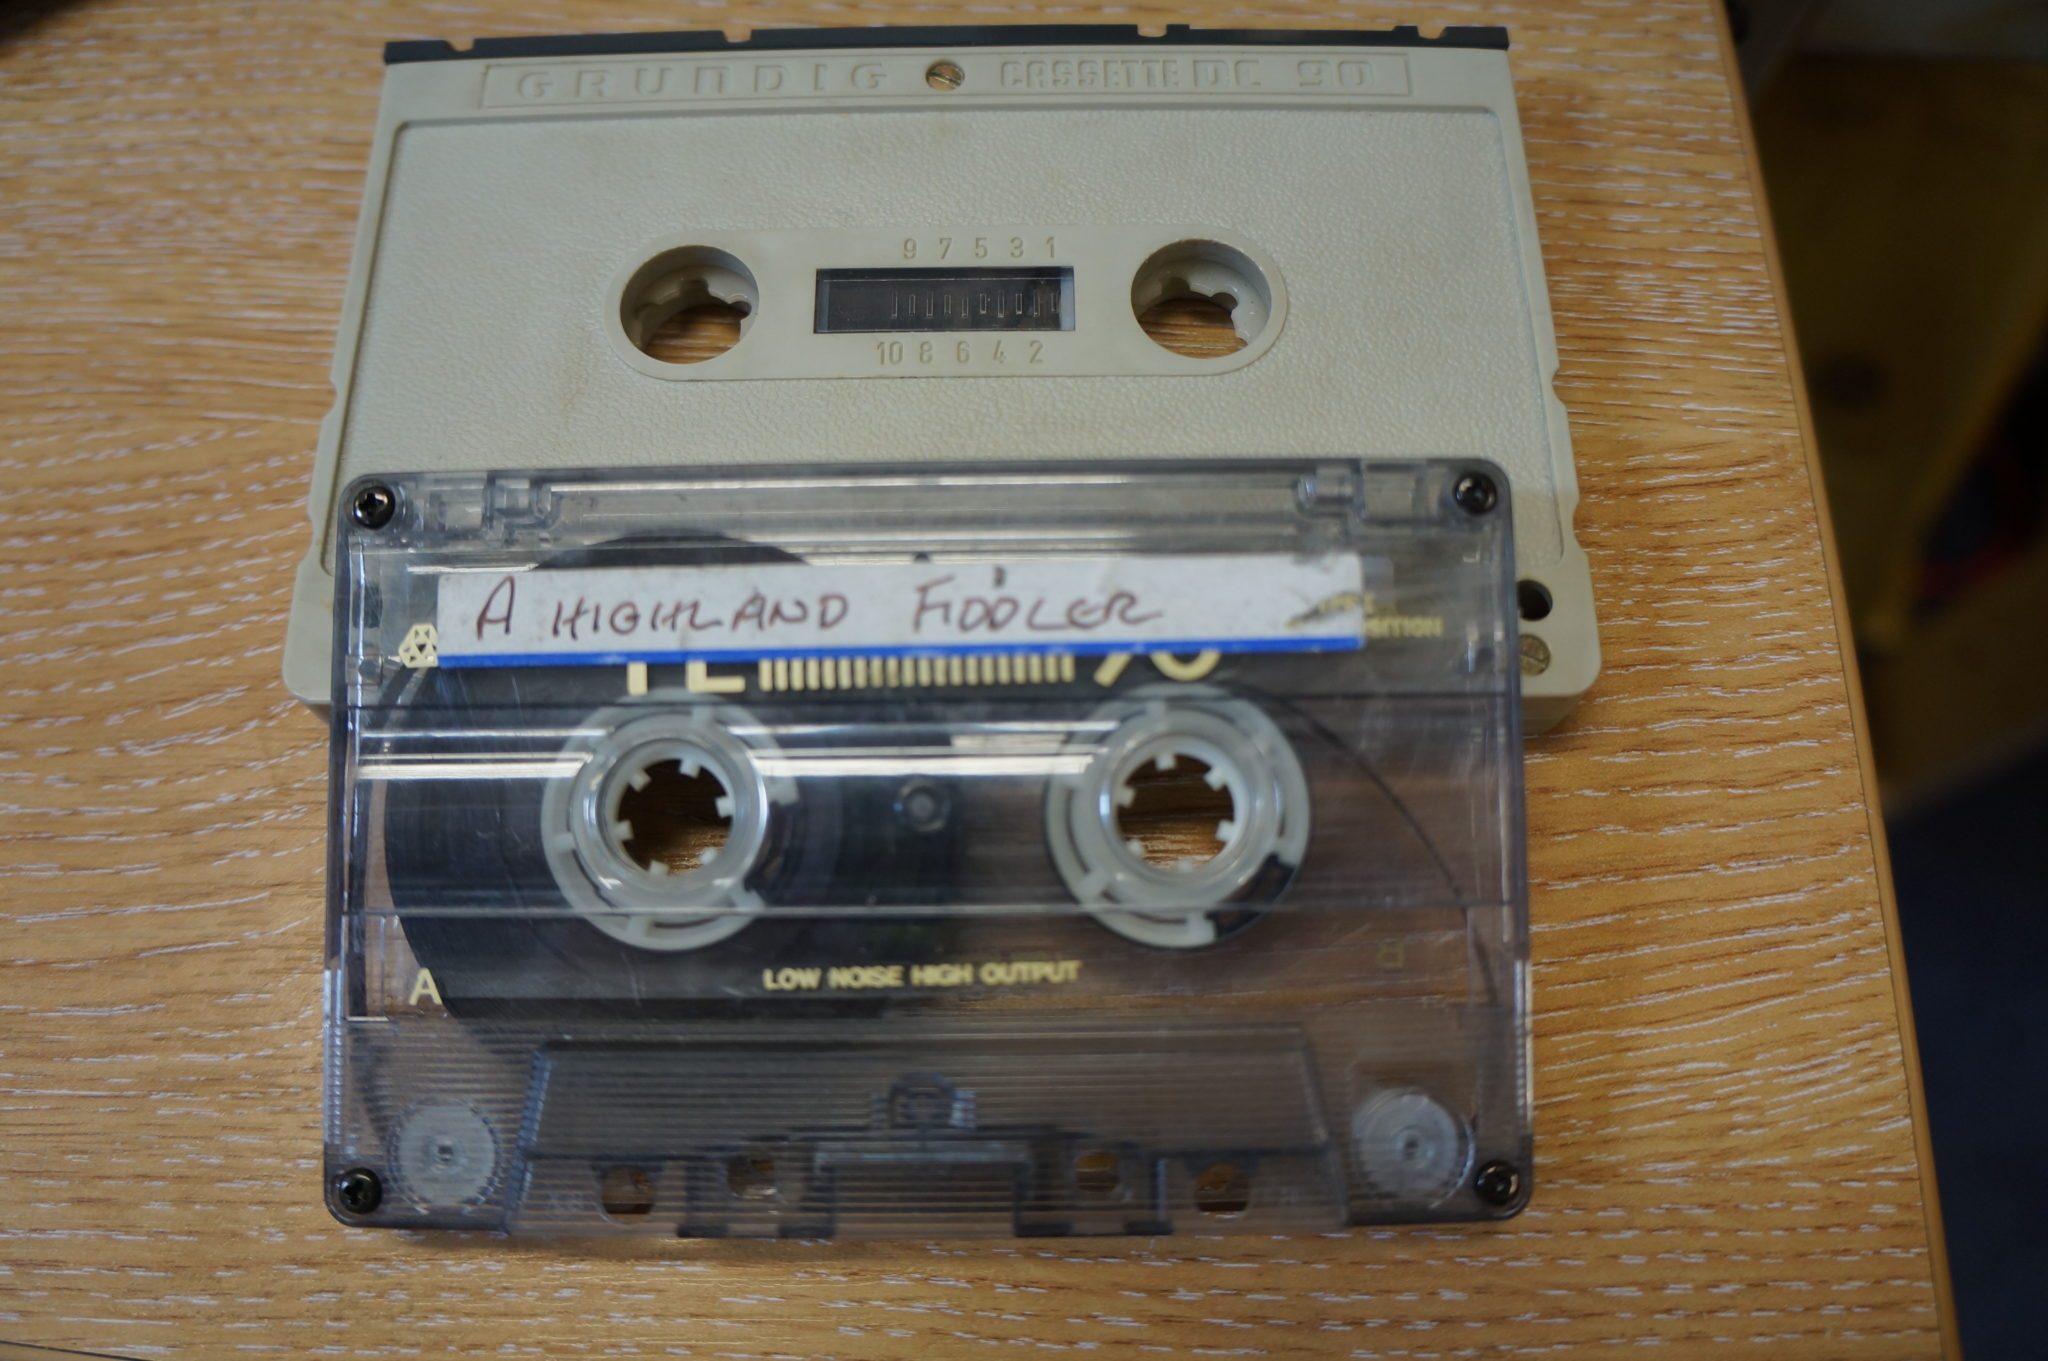 greatbear blog posts: audio tape